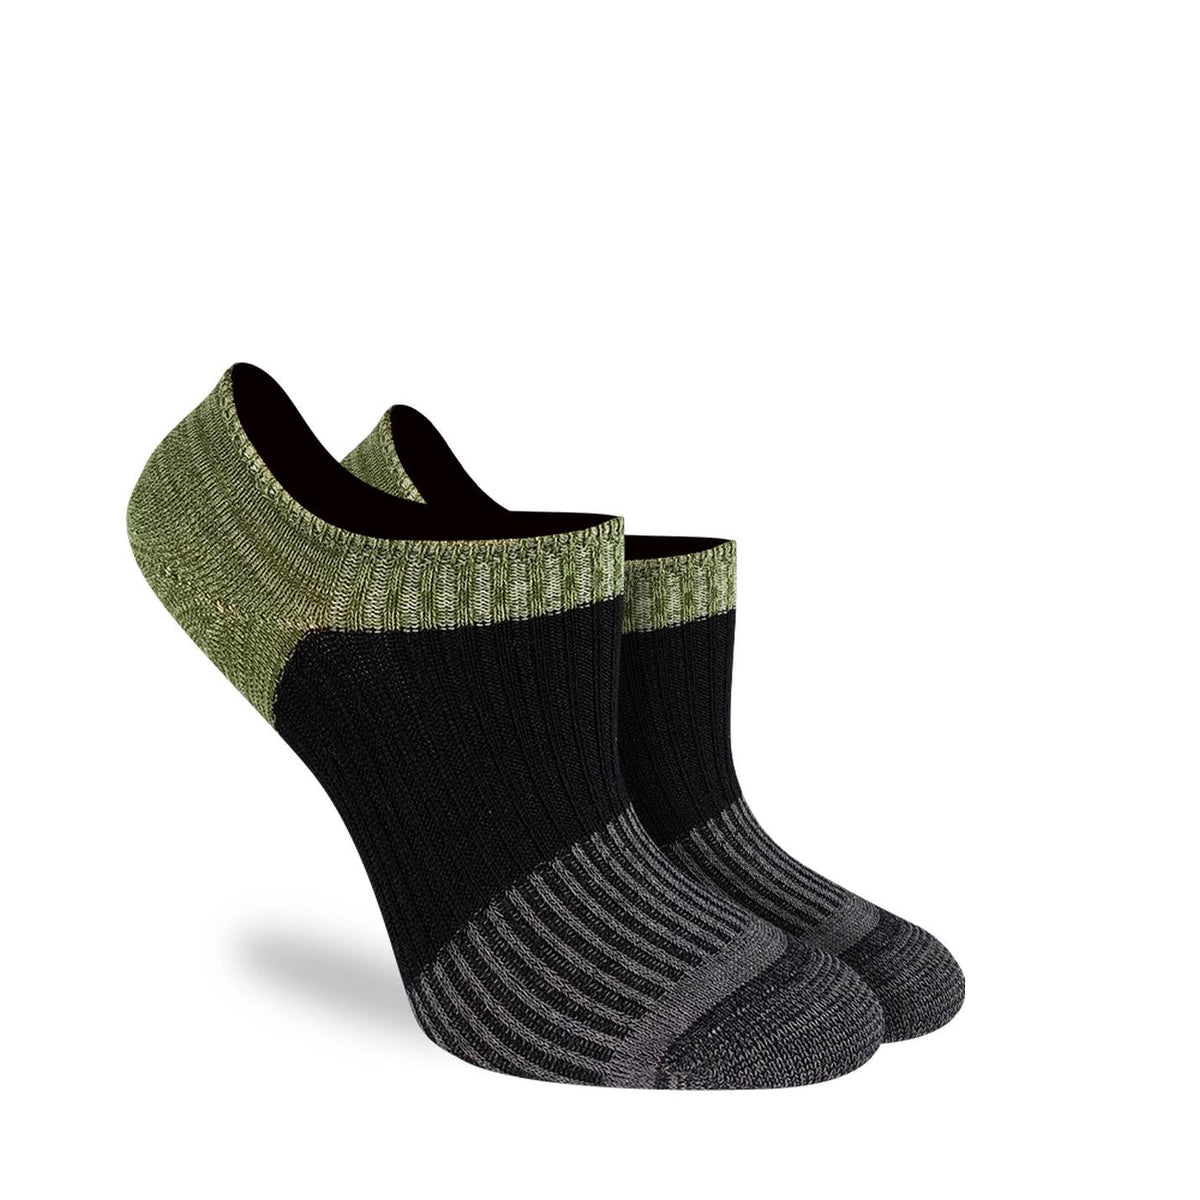 Women's Stripes - Green, Black, Grey No Show Socks